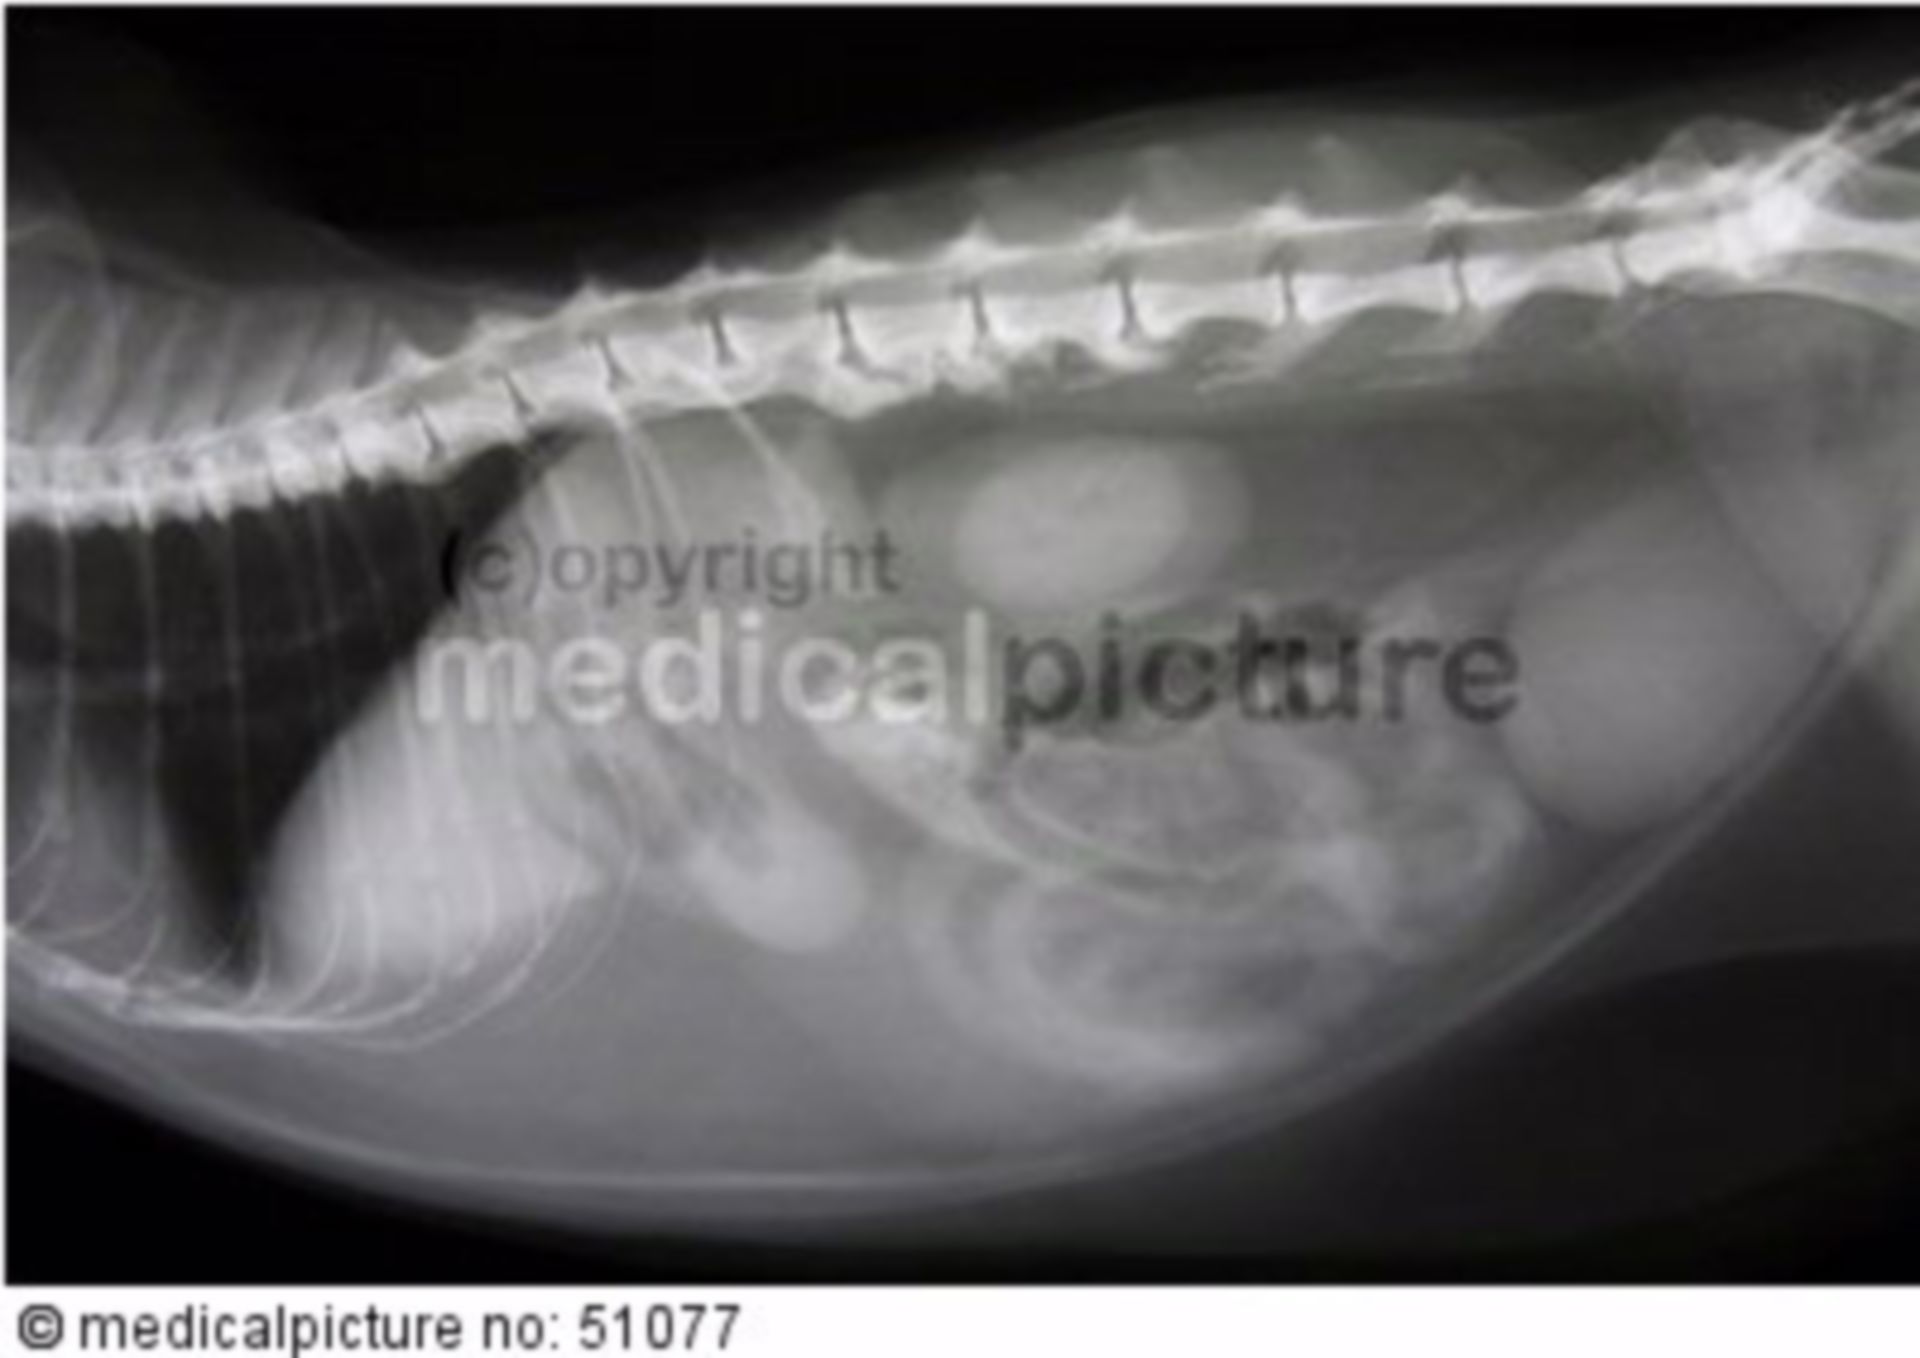 Veterinary practice, X-ray, dog